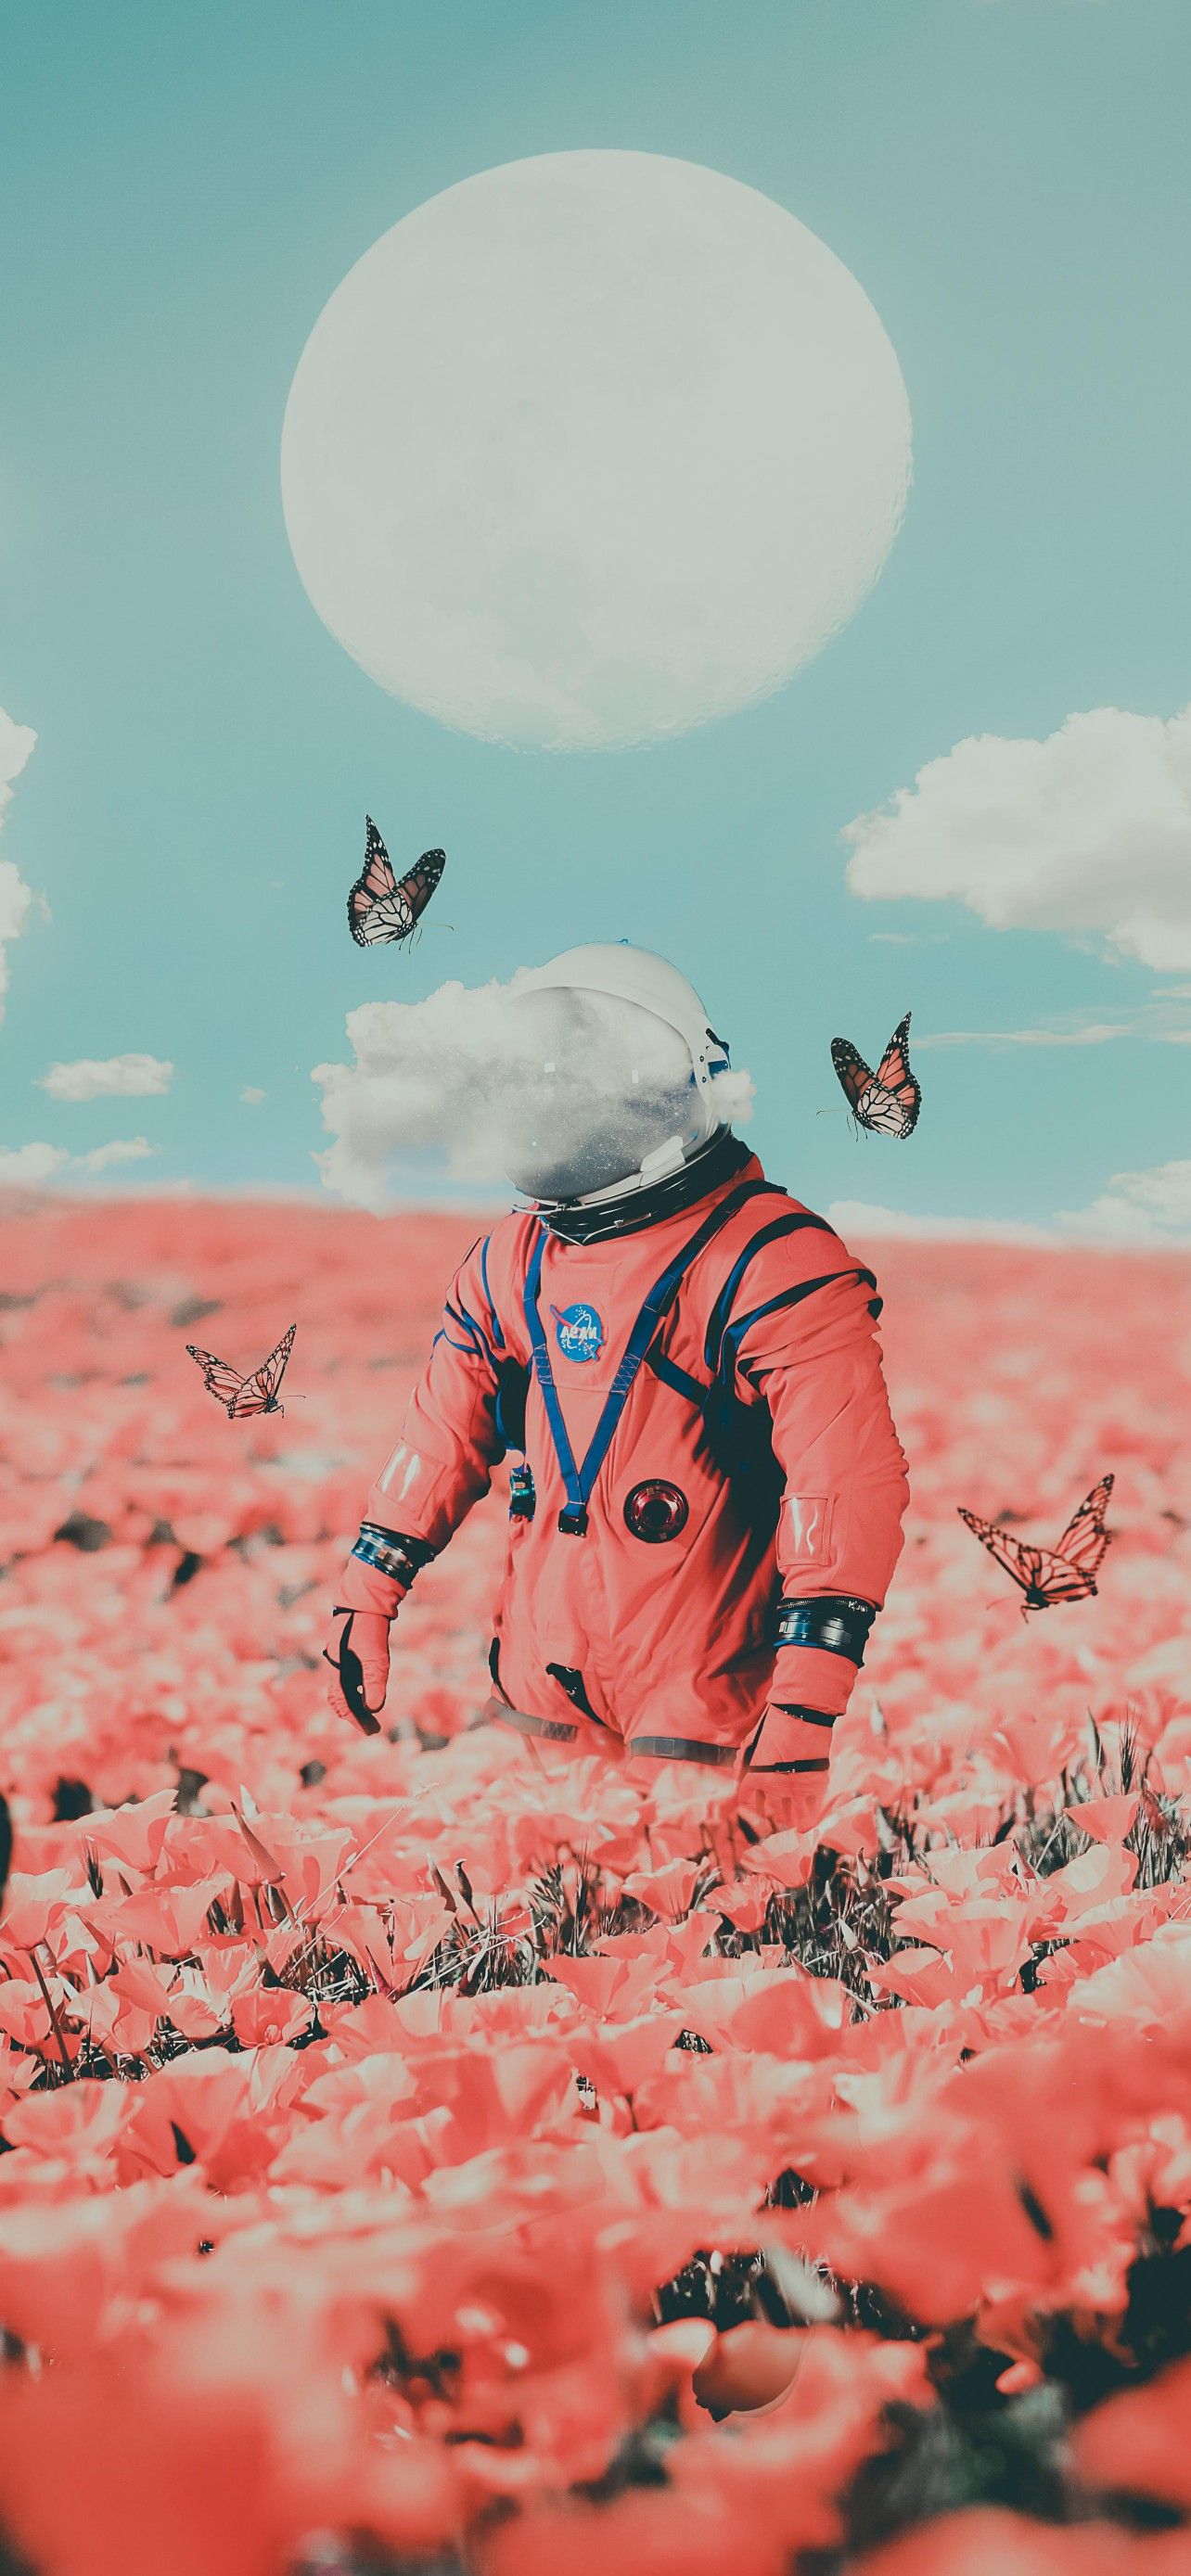 Astronaut Wallpaper 4K, NASA, Flower garden, Butterflies, Surreal, Moon, Fantasy